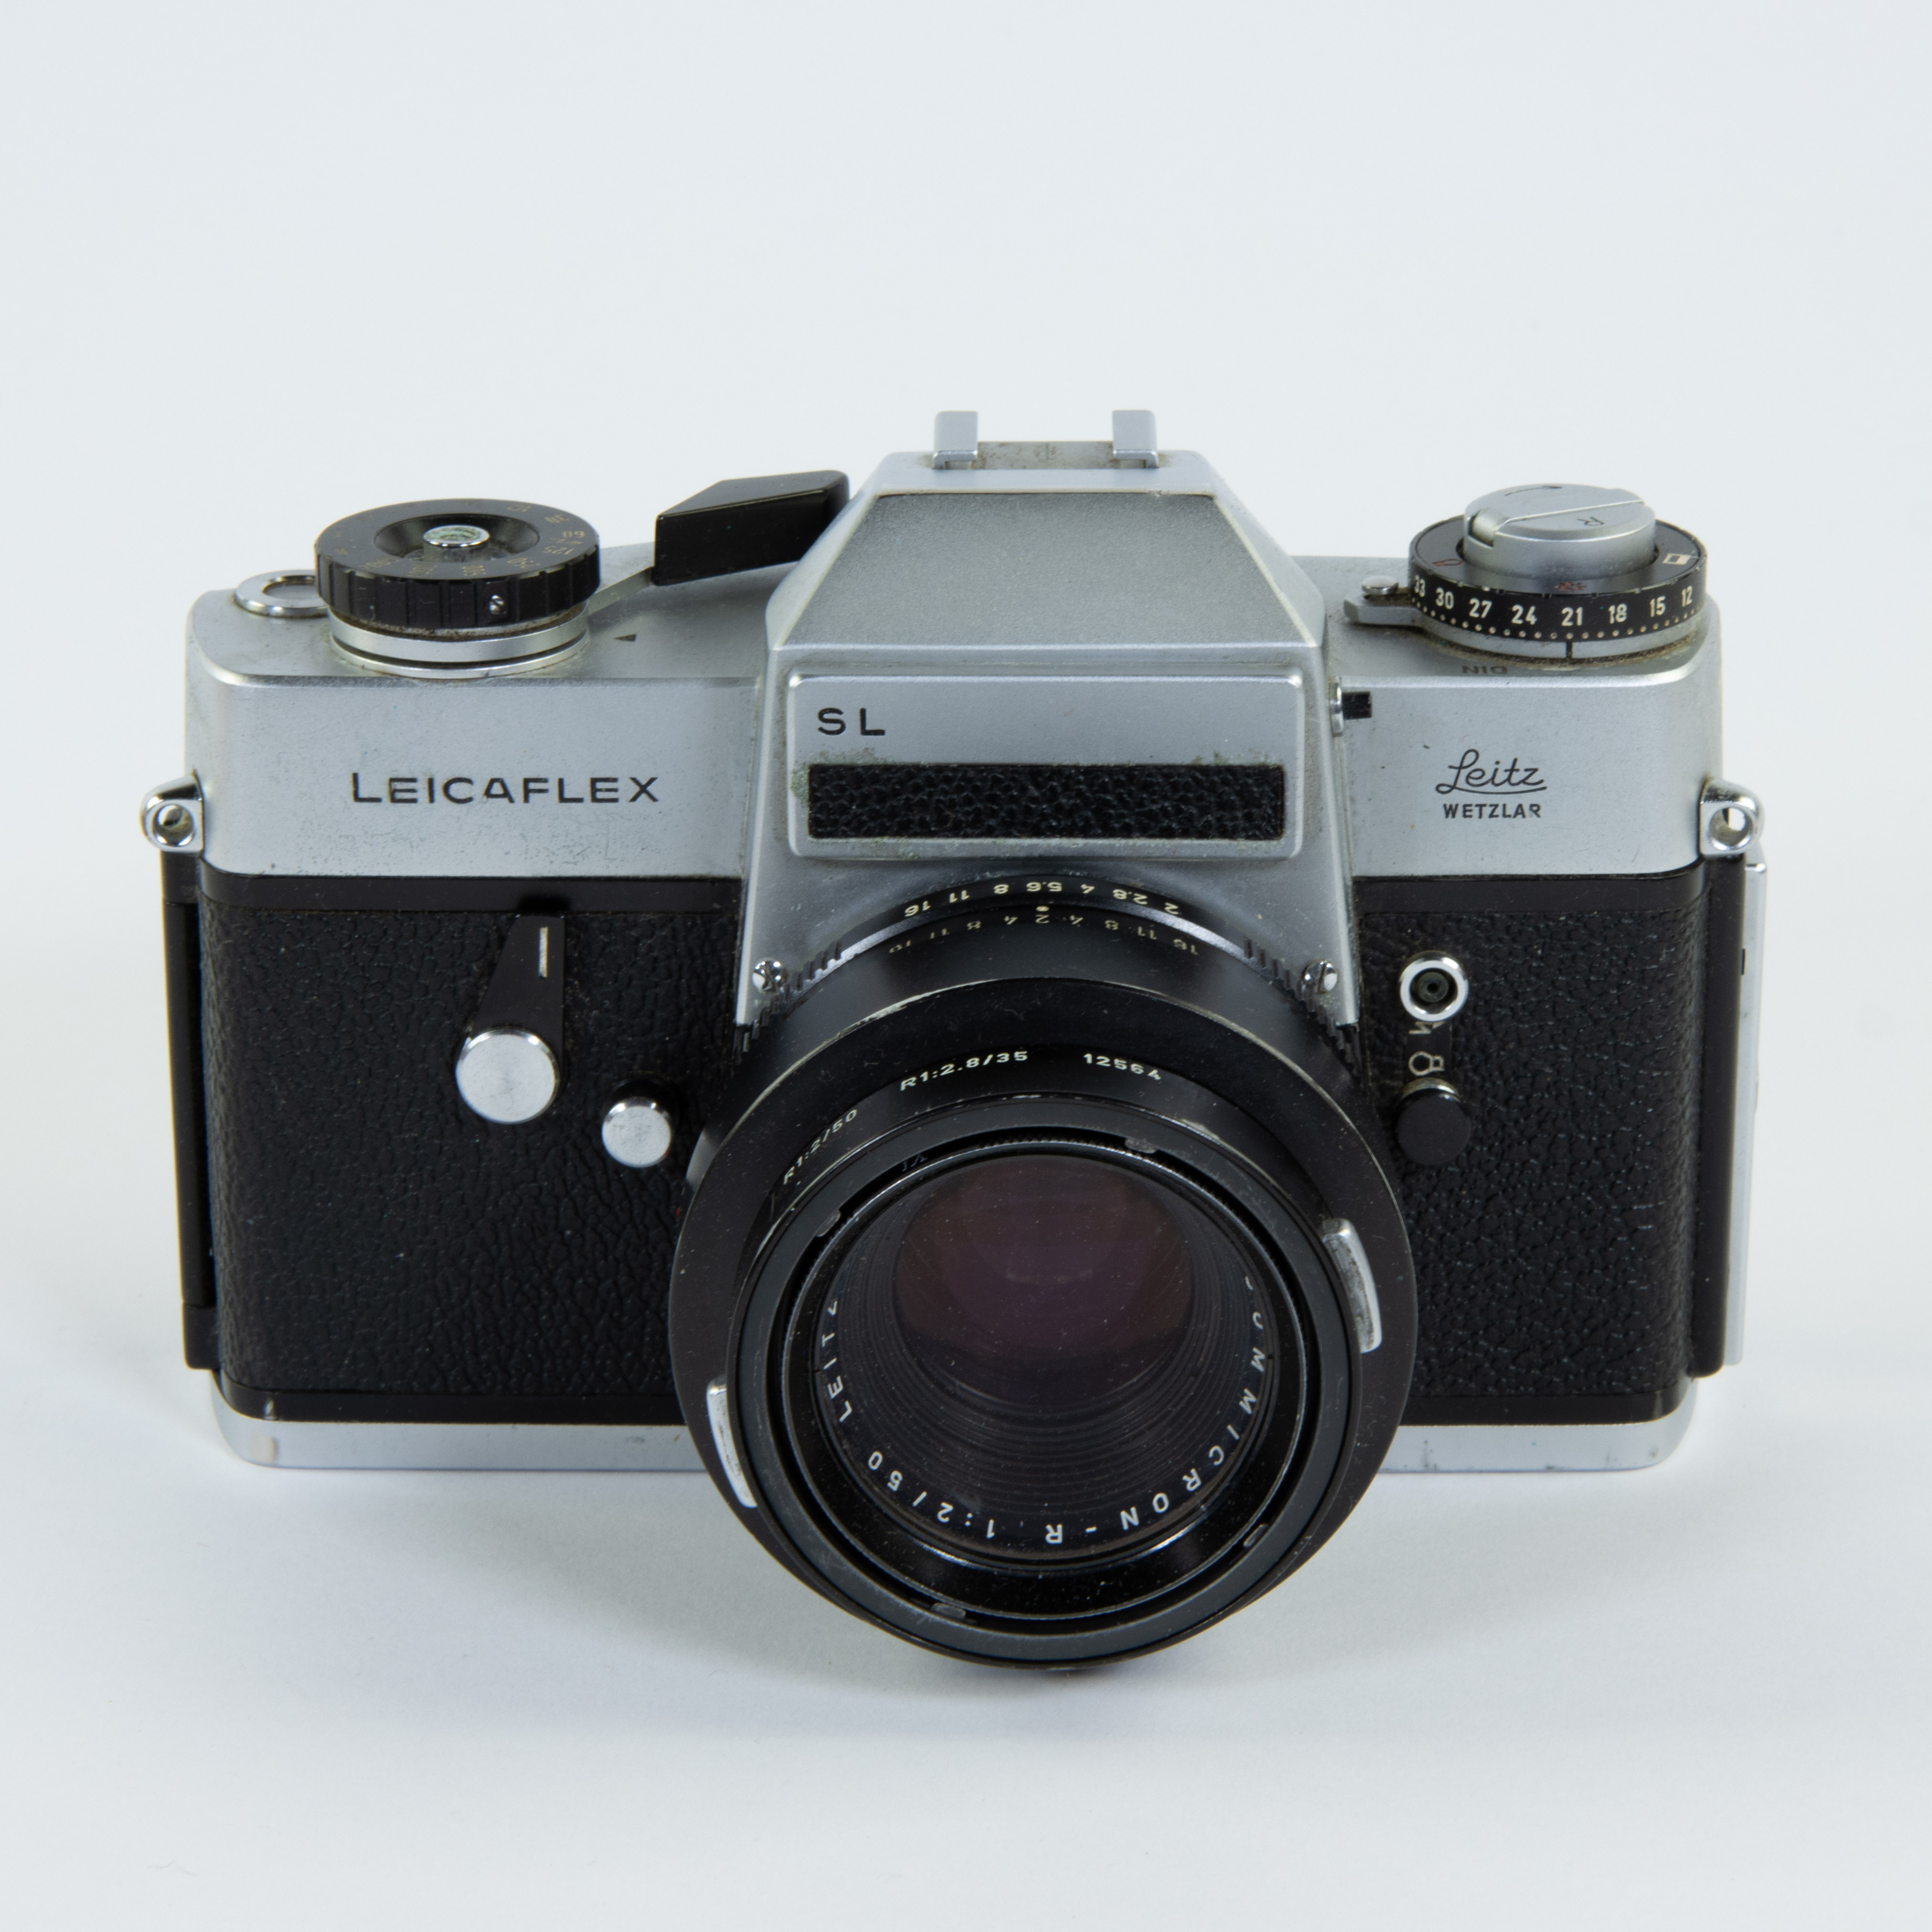 LEICAFLEX camera with accompanying telephoto lens